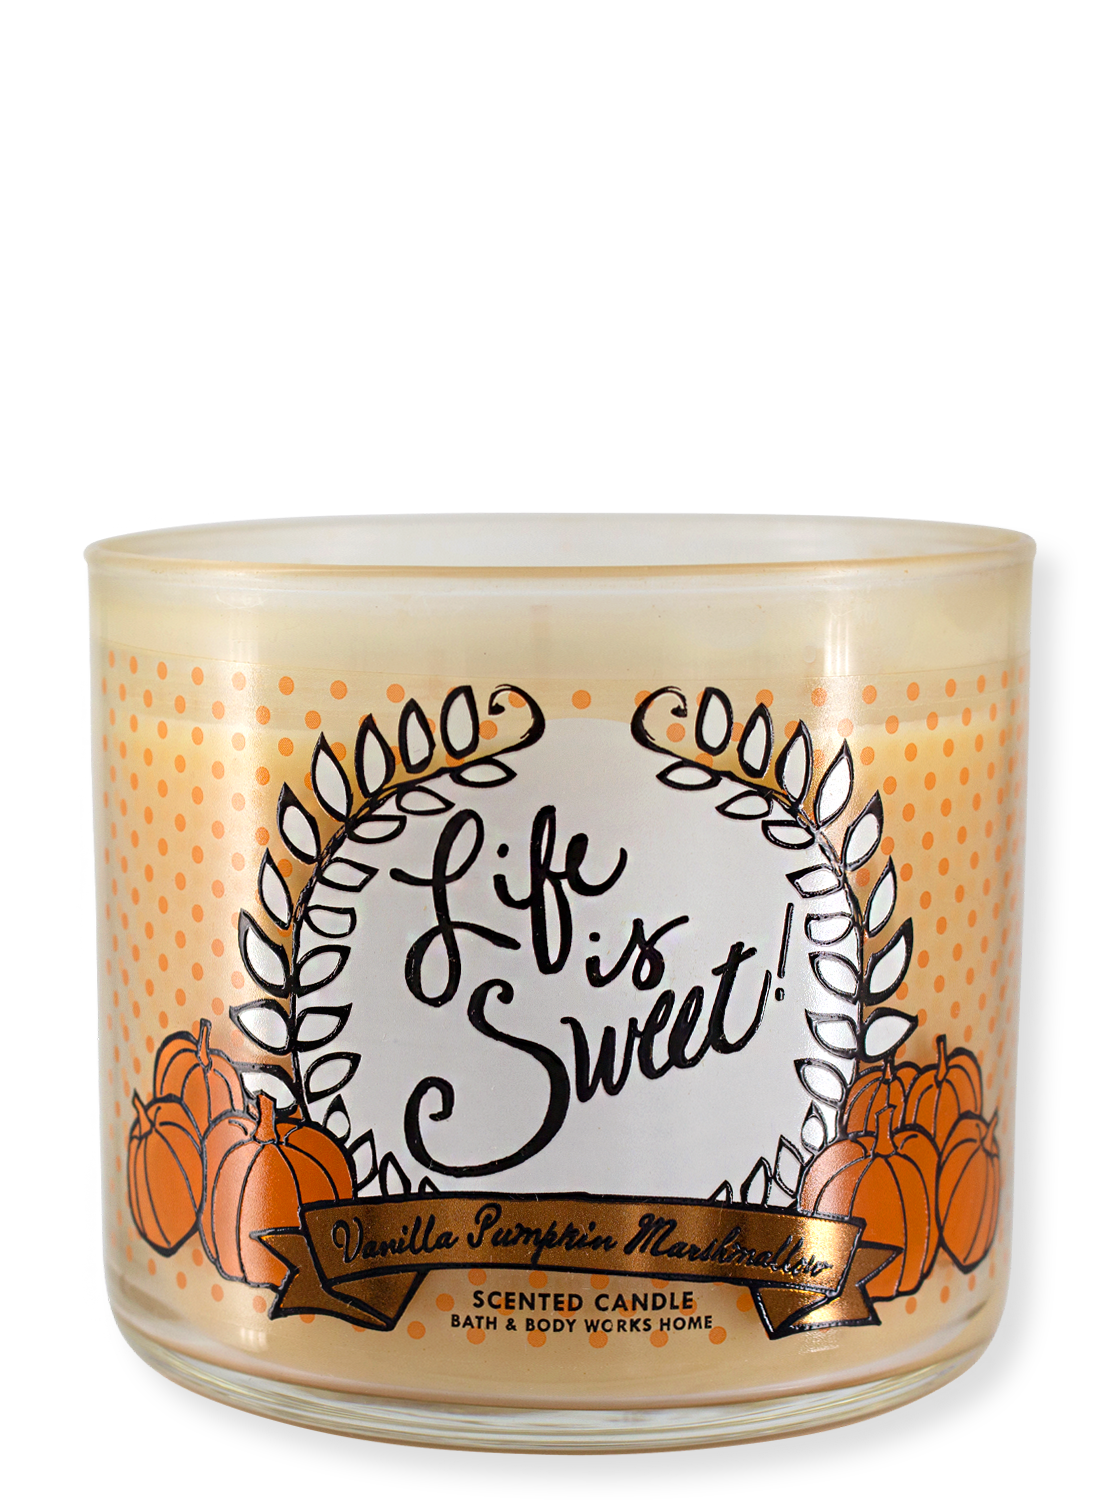 Rarity - 3 -poke candle - life is sweet! - Vanilla Pumpkin Marshmallow - 411g